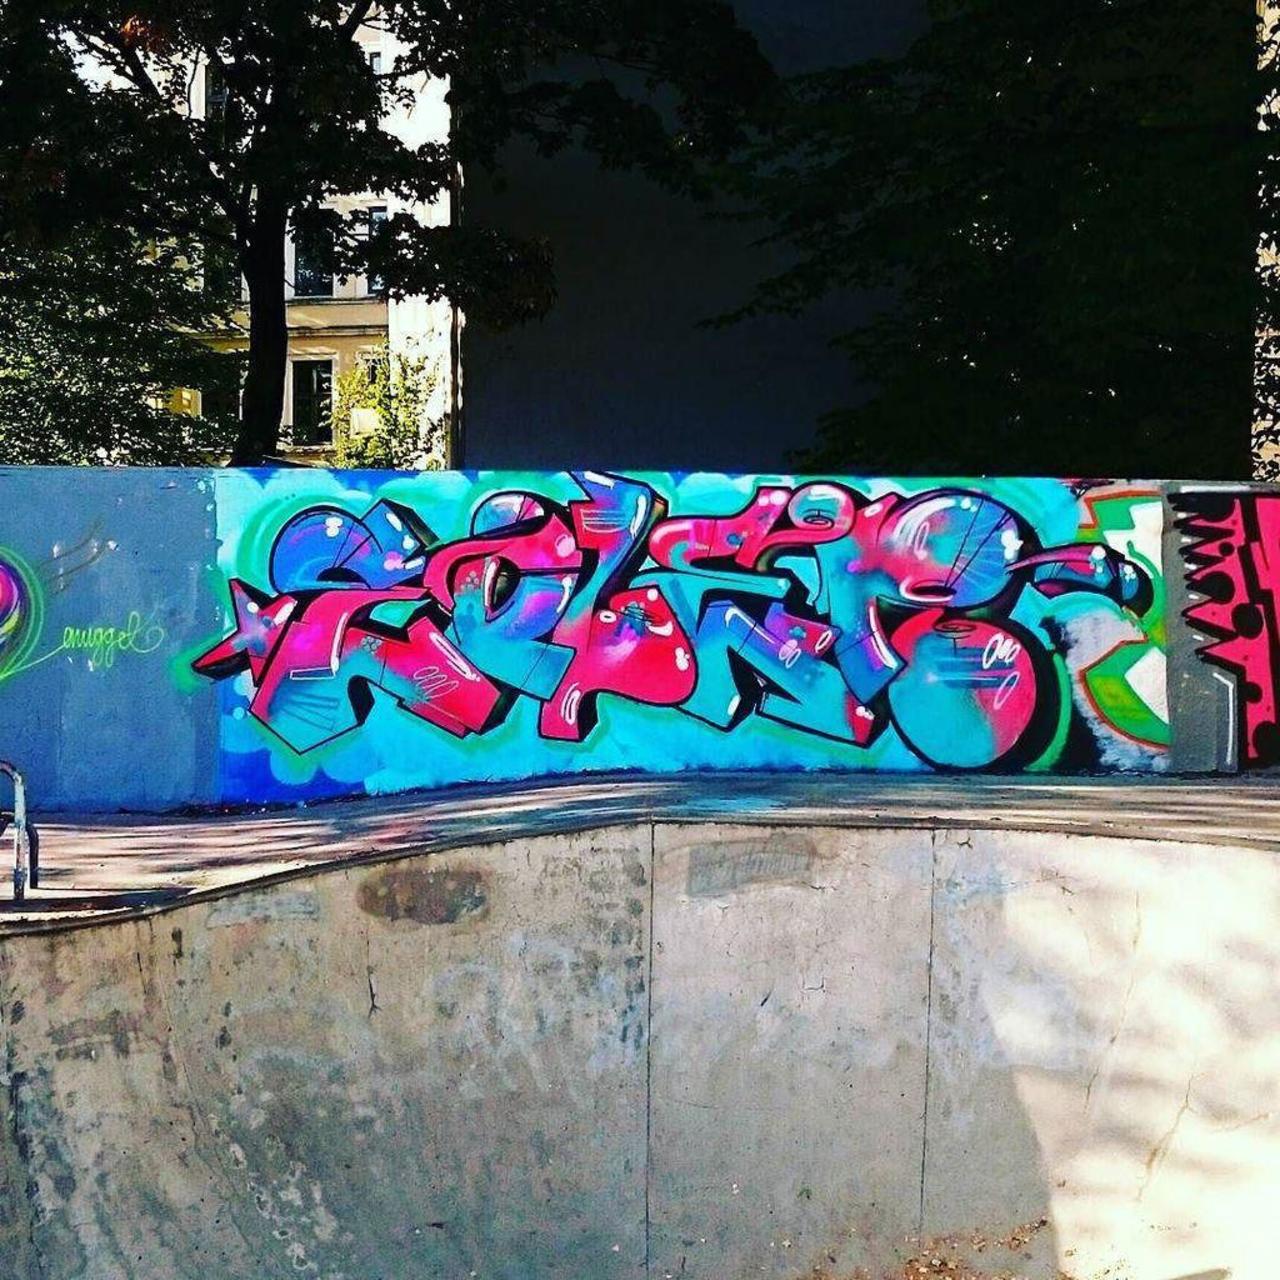 RT @artpushr: via #edler.one "http://bit.ly/1OcWQT2" #graffiti #streetart http://t.co/0vpgp0cjQd